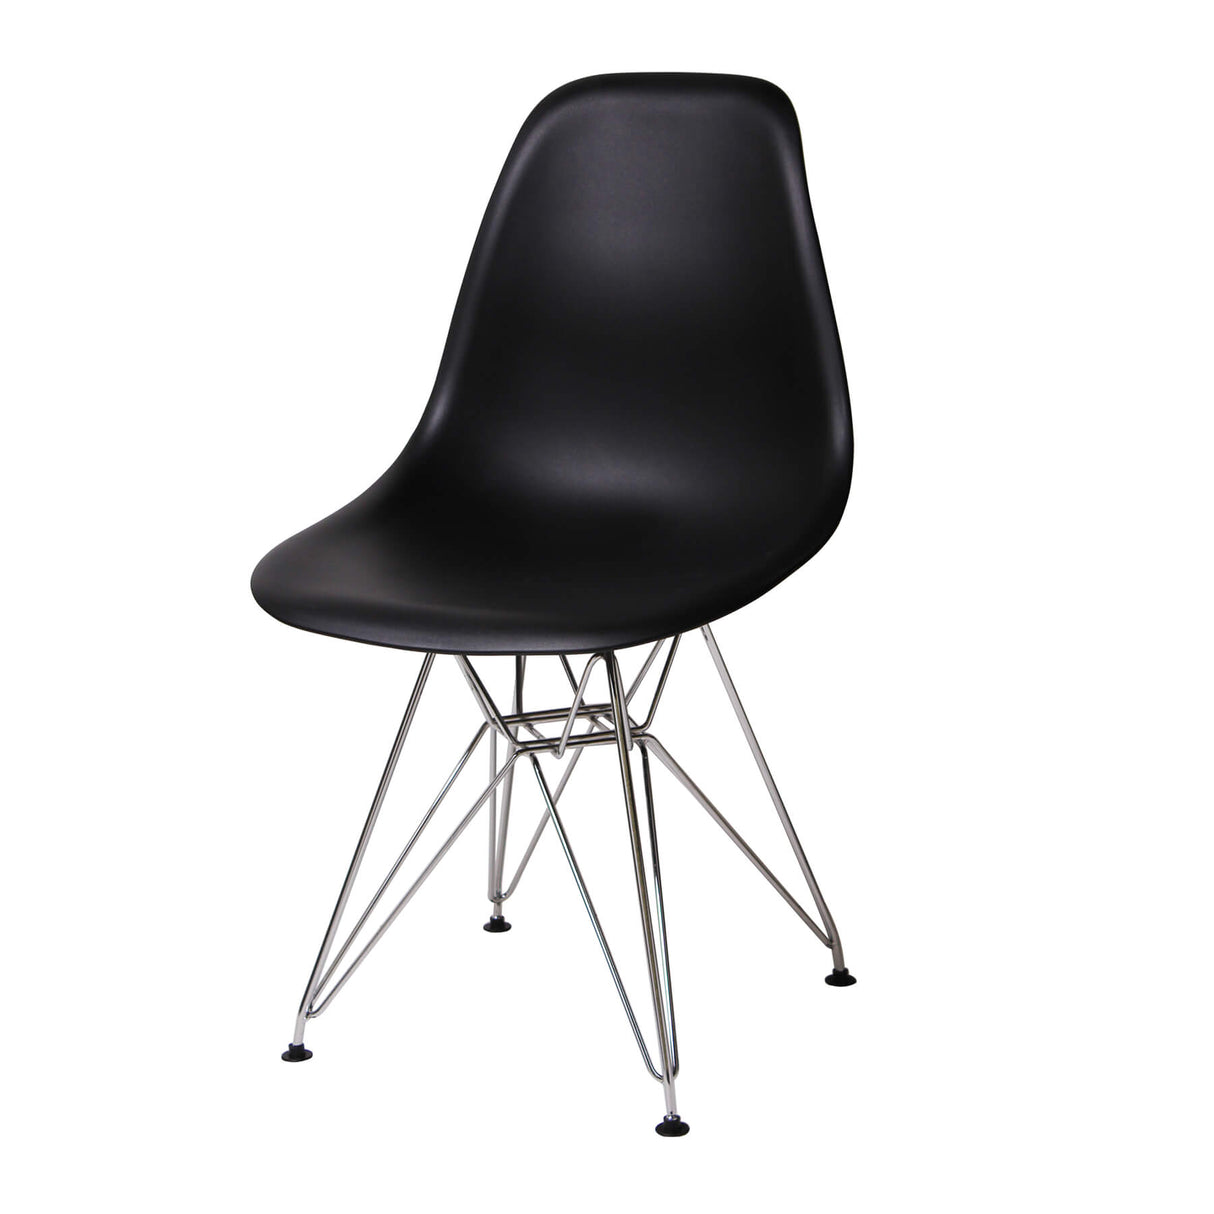 Bianca Plastic Chair Black With Steel Chrome Legs